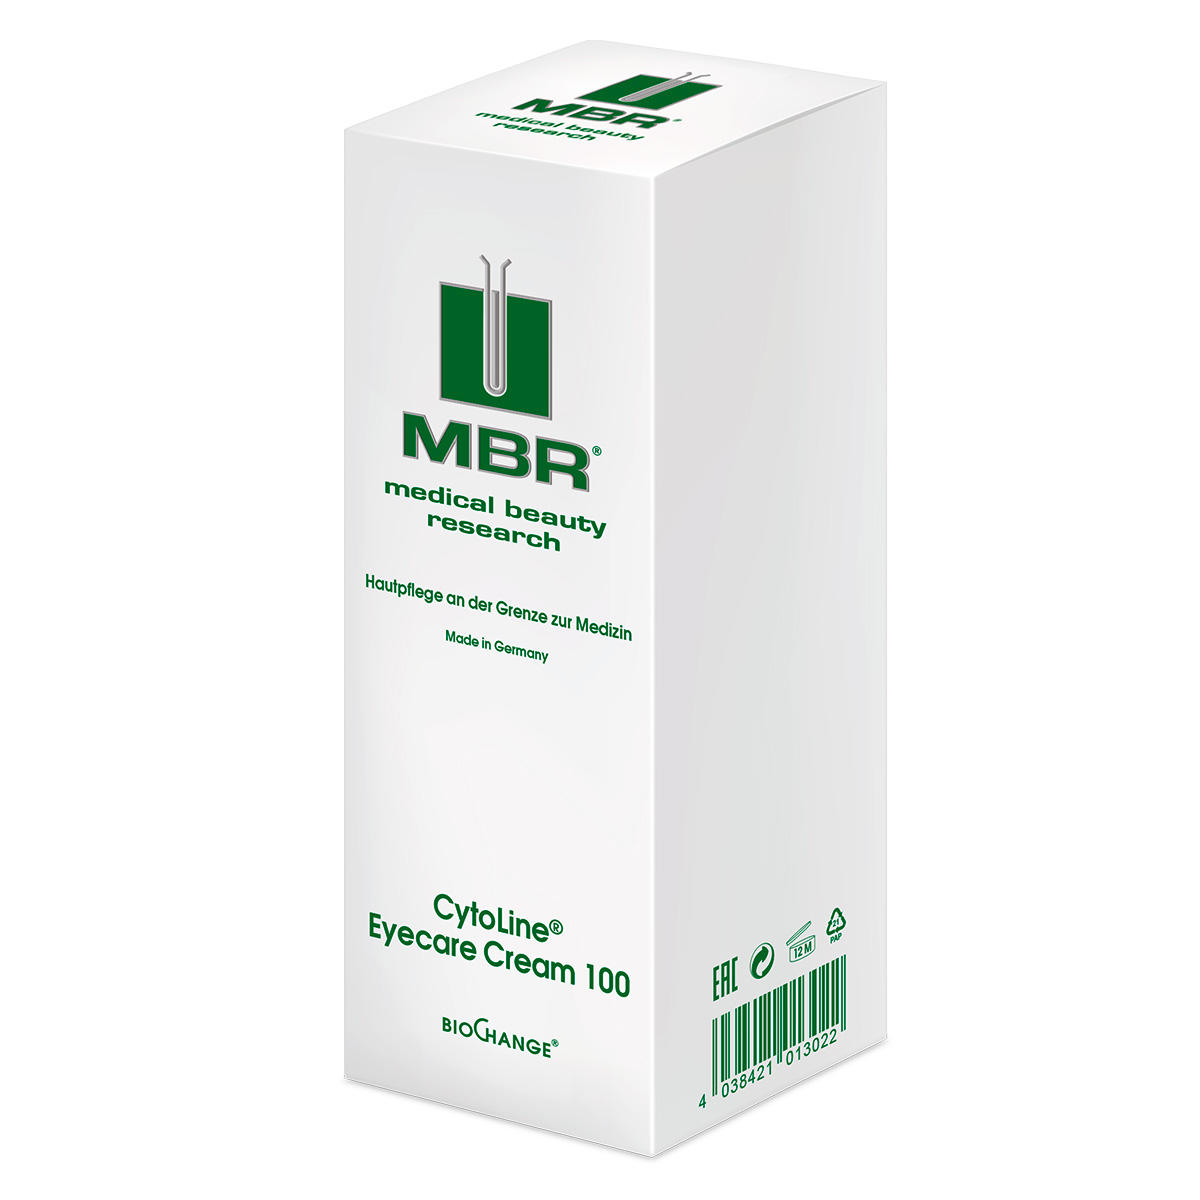 MBR Medical Beauty Research BioChange CytoLine Eyecare Cream 100 30 ml - 3